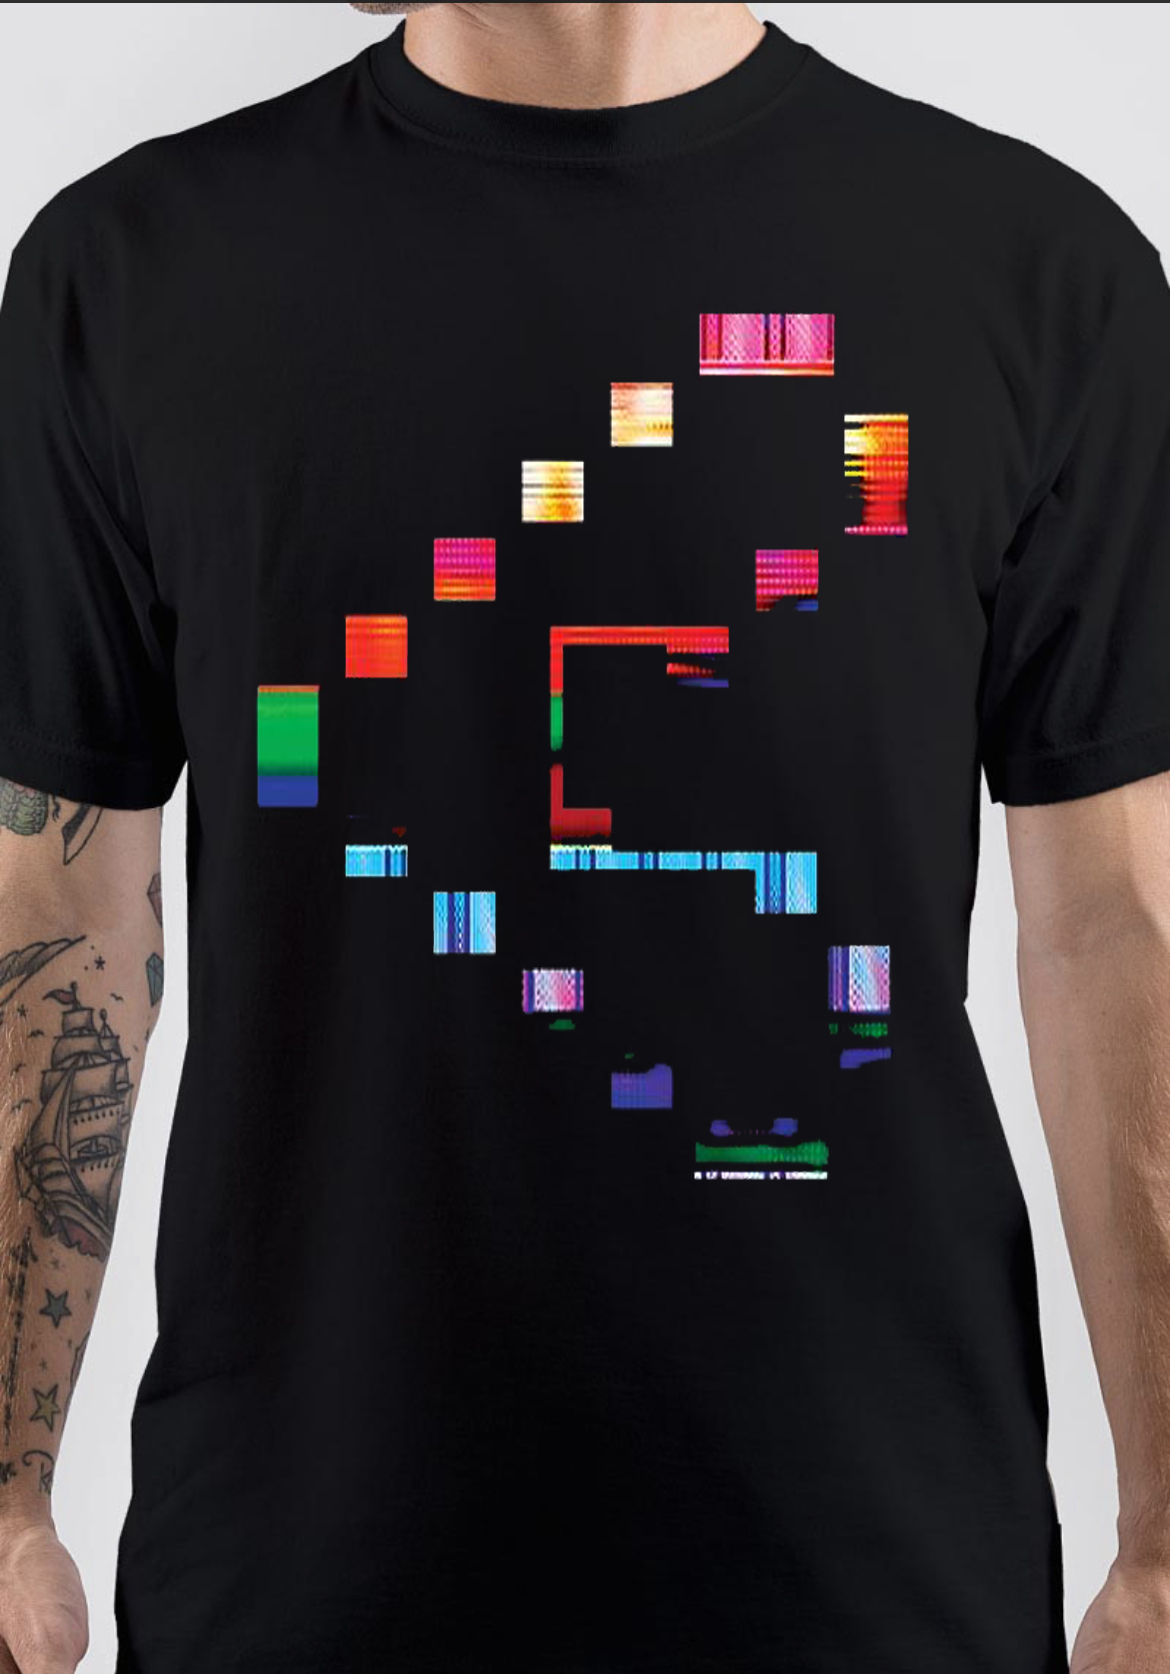 Squarepusher T-Shirt - Swag Shirts